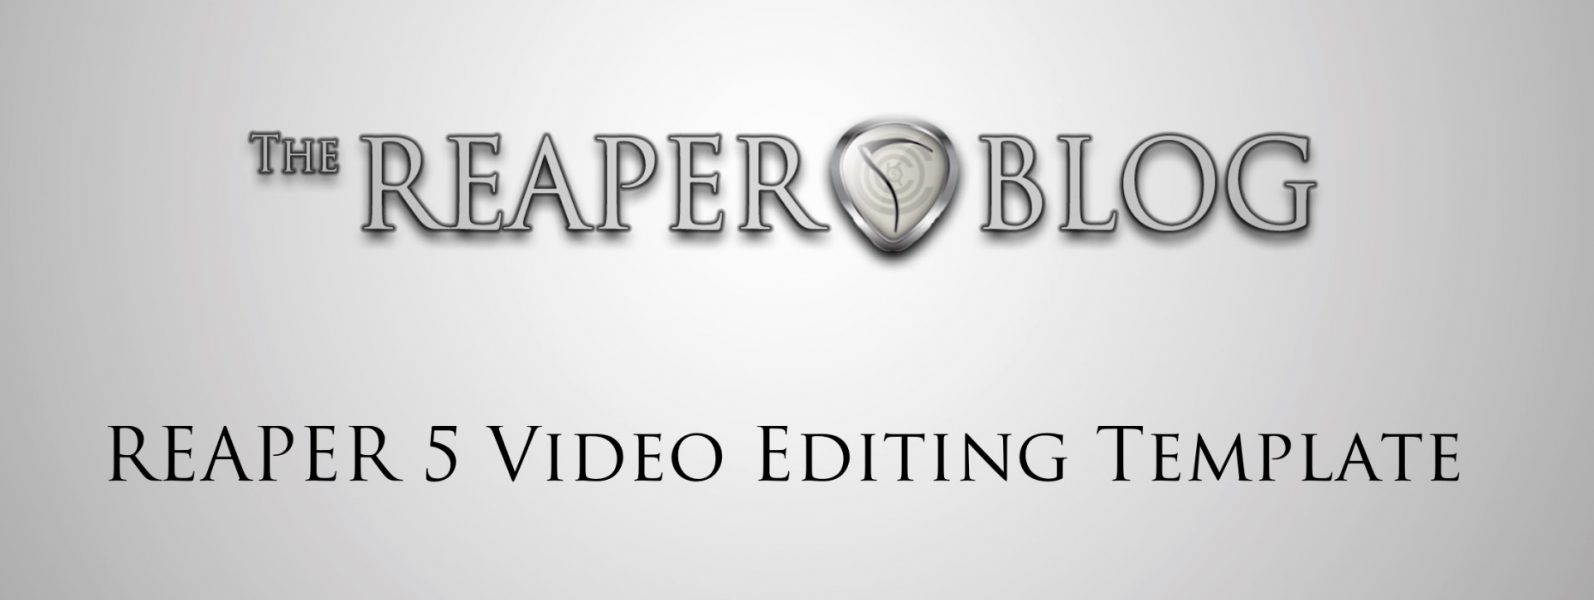 REAPER 5 Video Editing Template